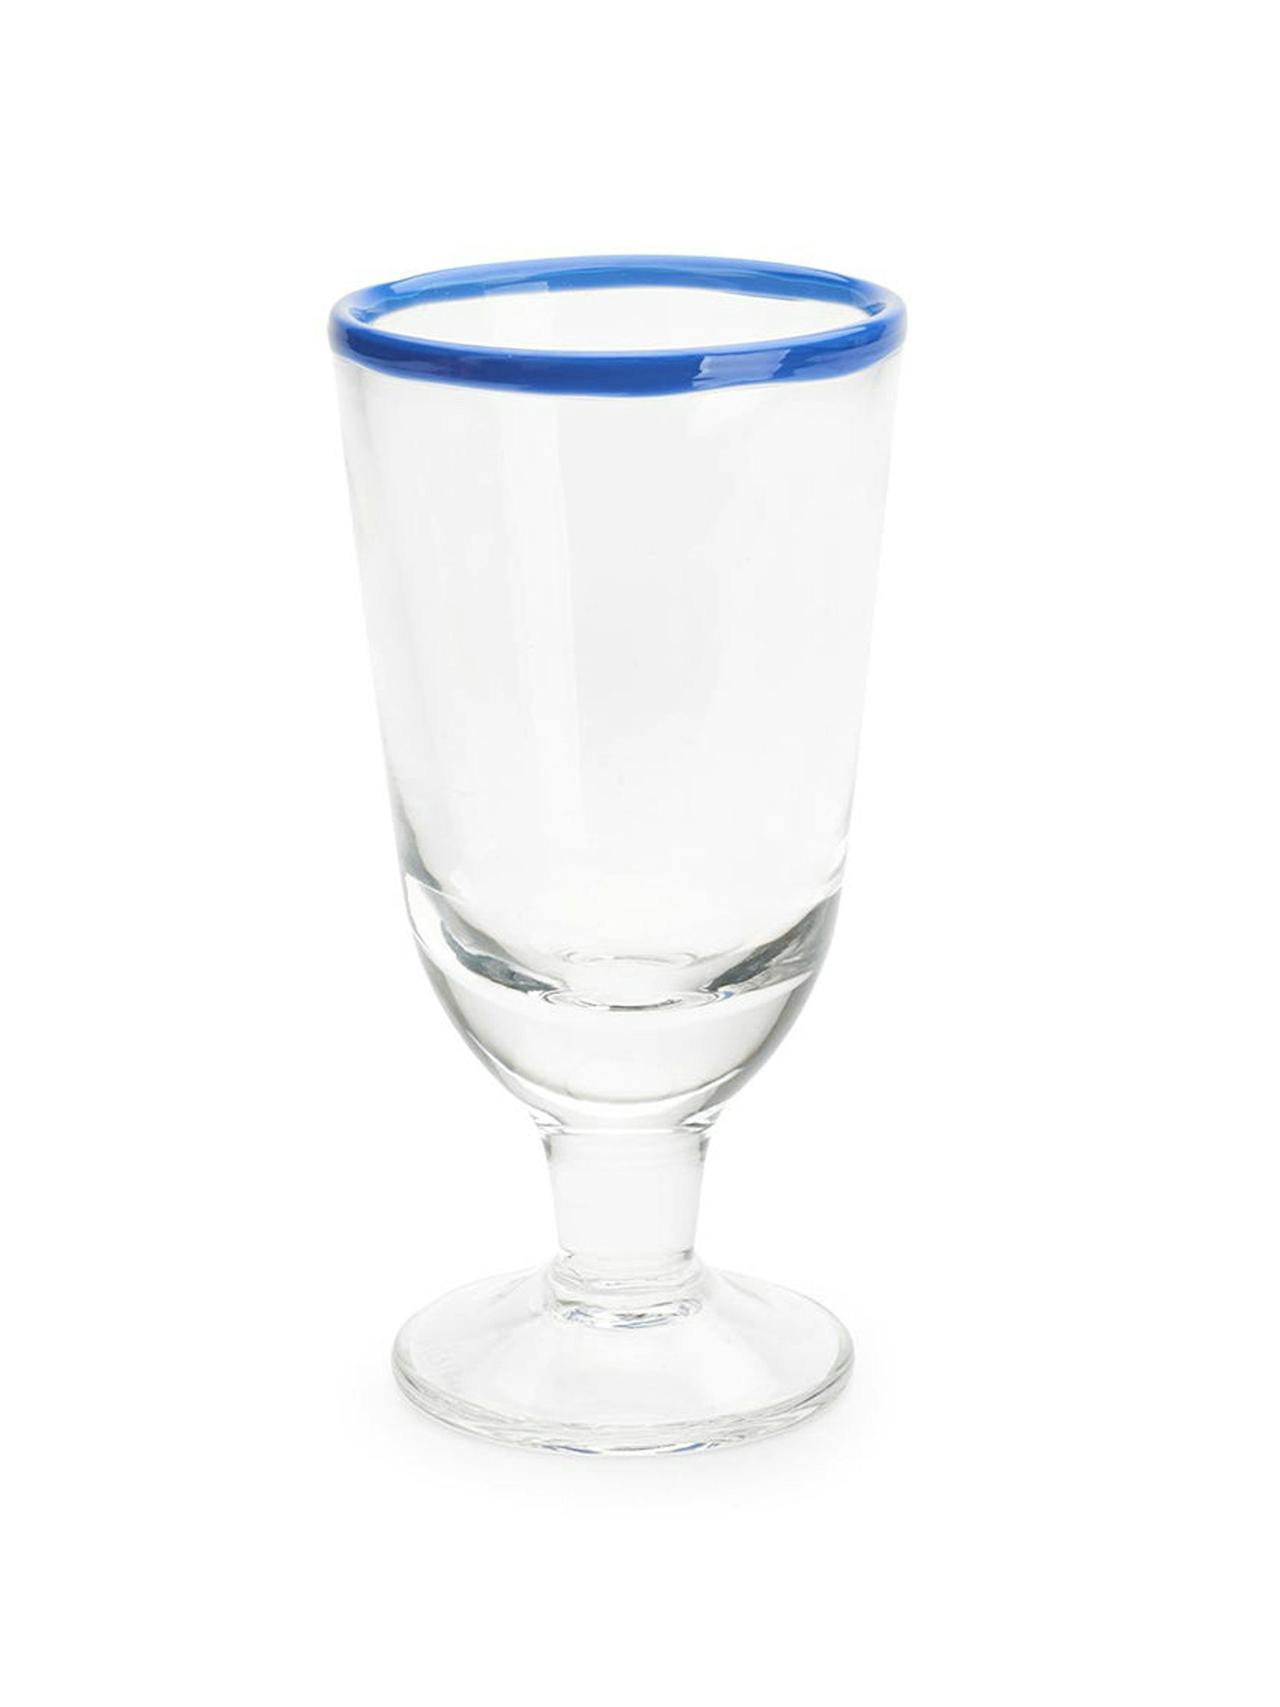 Ledbury blue tipped wine glass